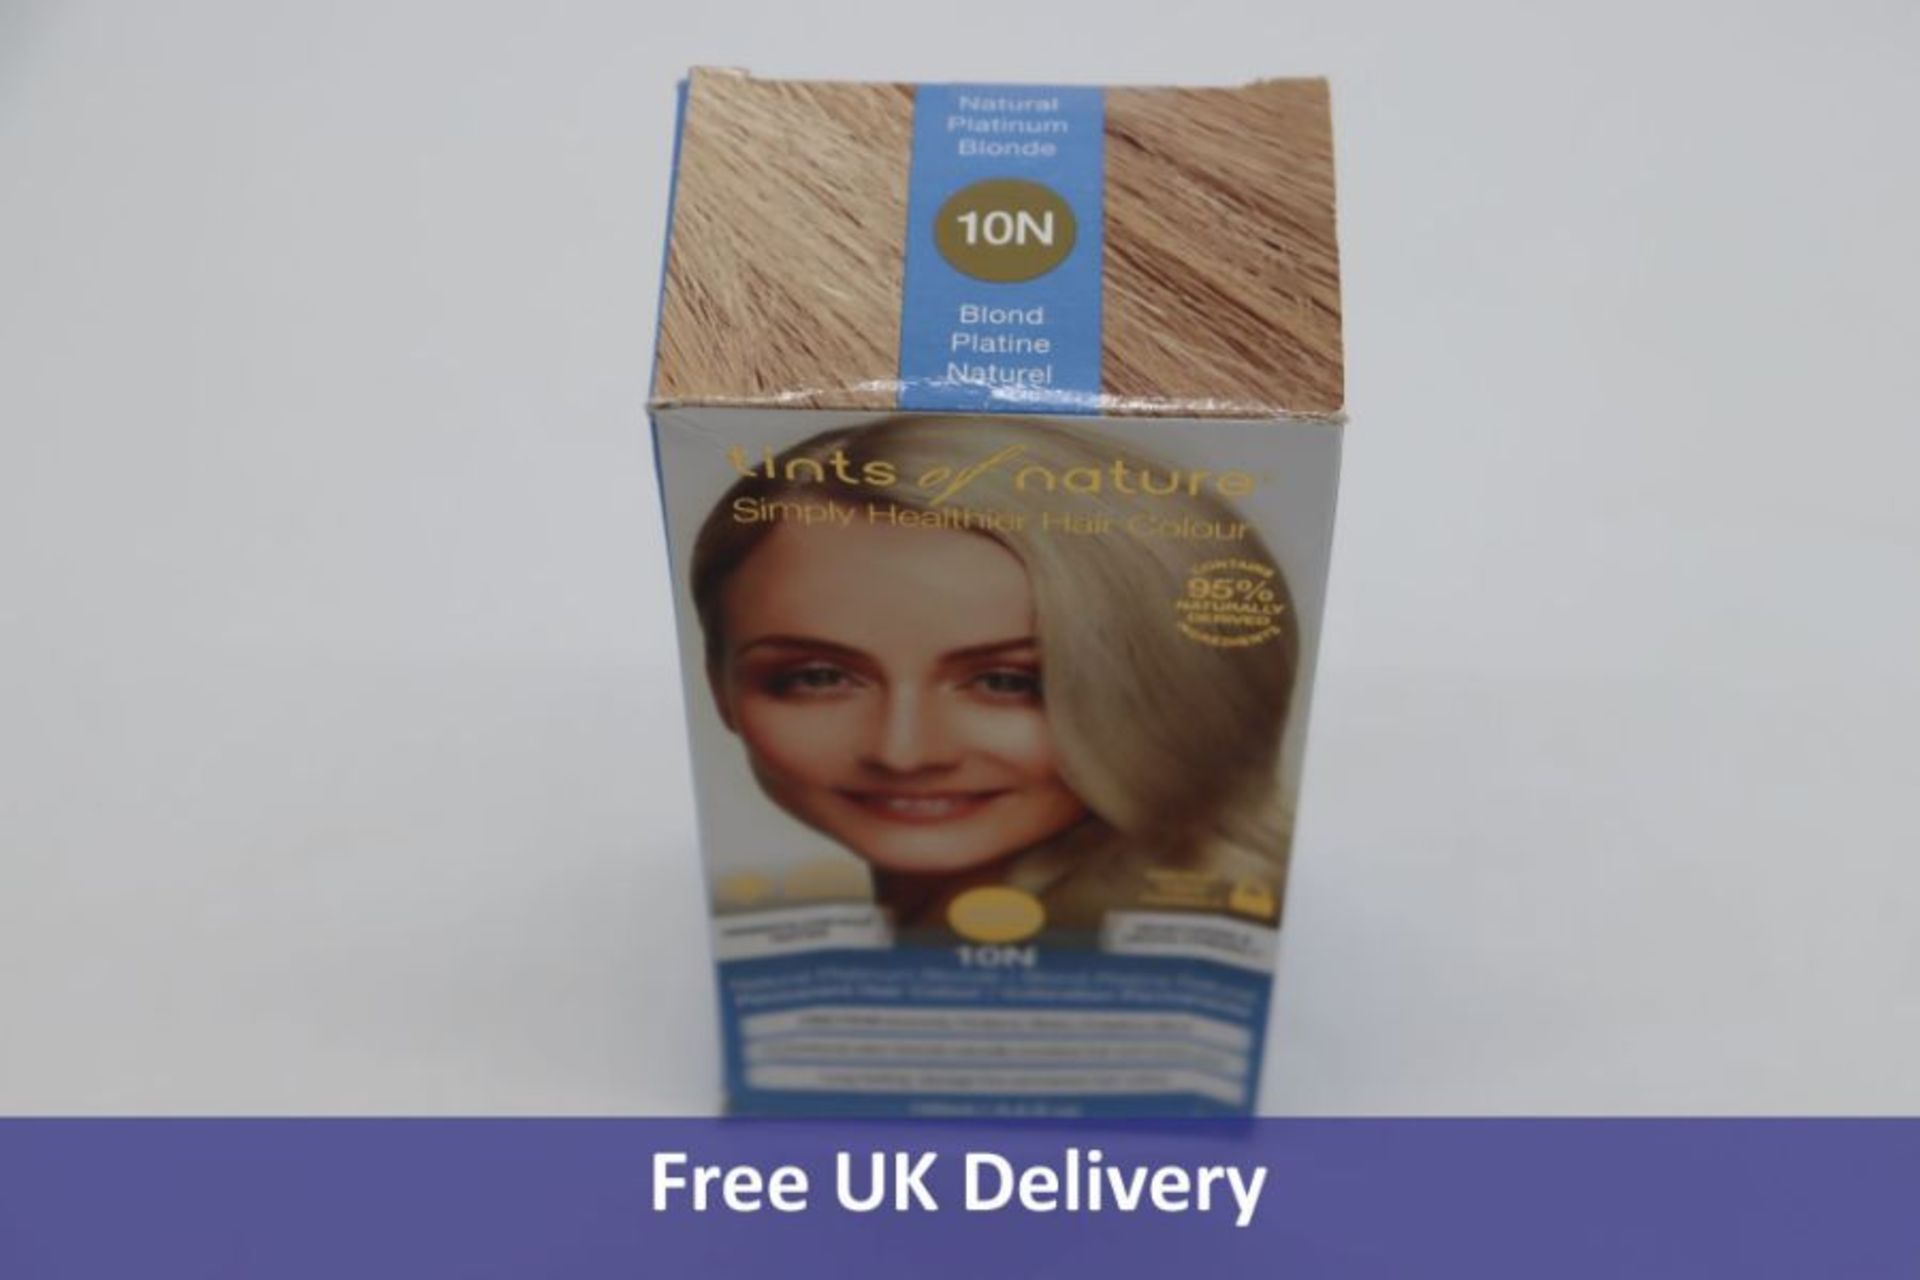 Twelve Tints of Nature 10N Natural Platinum Blonde Permanent Hair Colour. Boxes damages